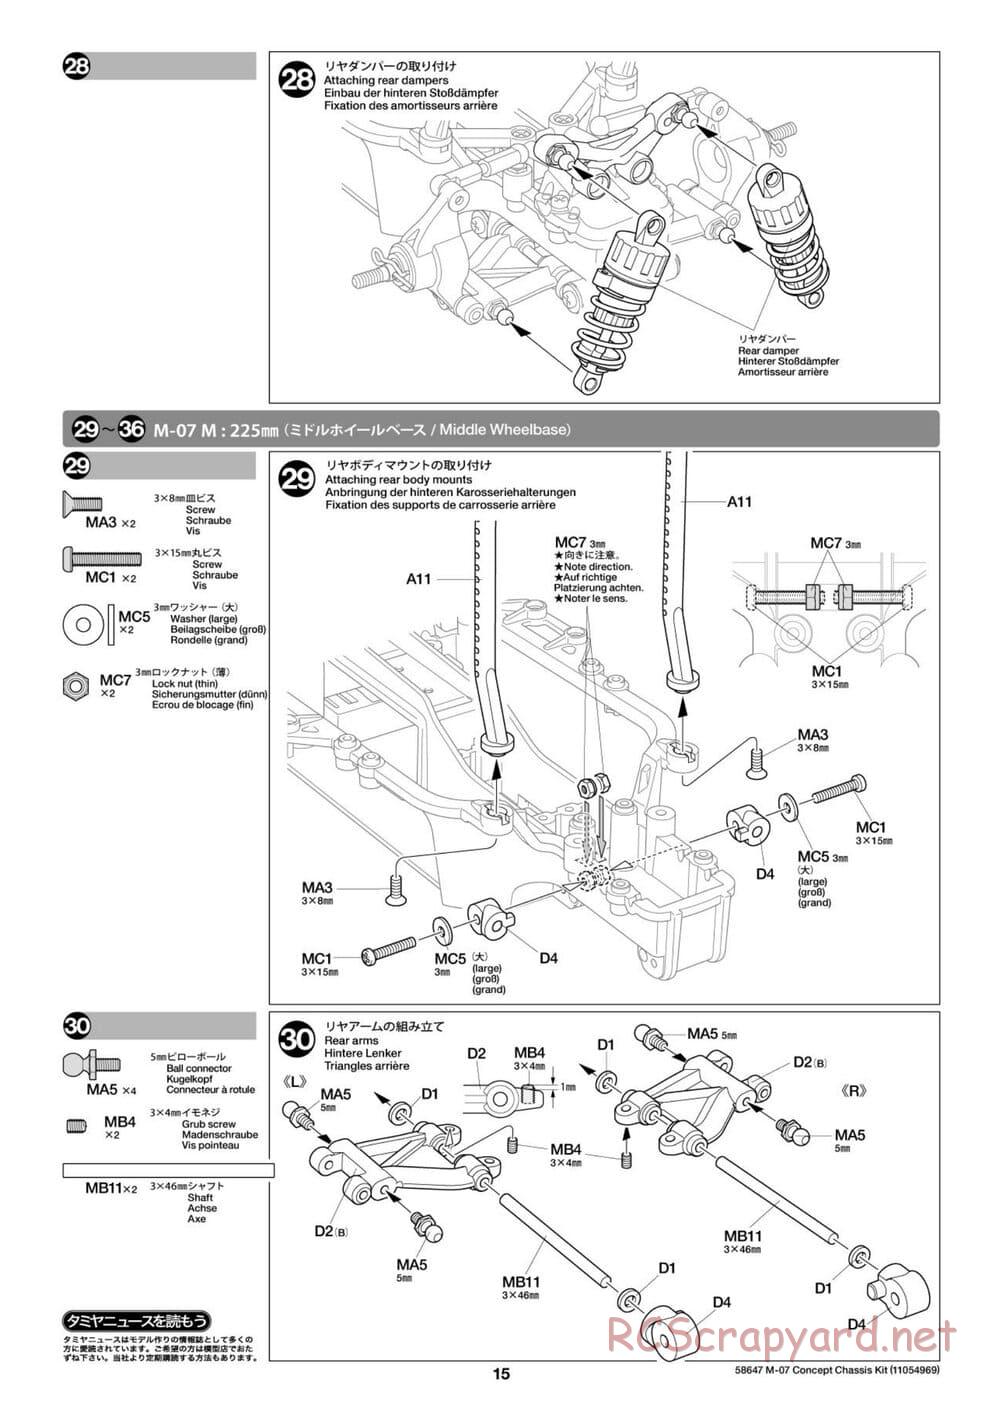 Tamiya - M-07 Concept Chassis - Manual - Page 15